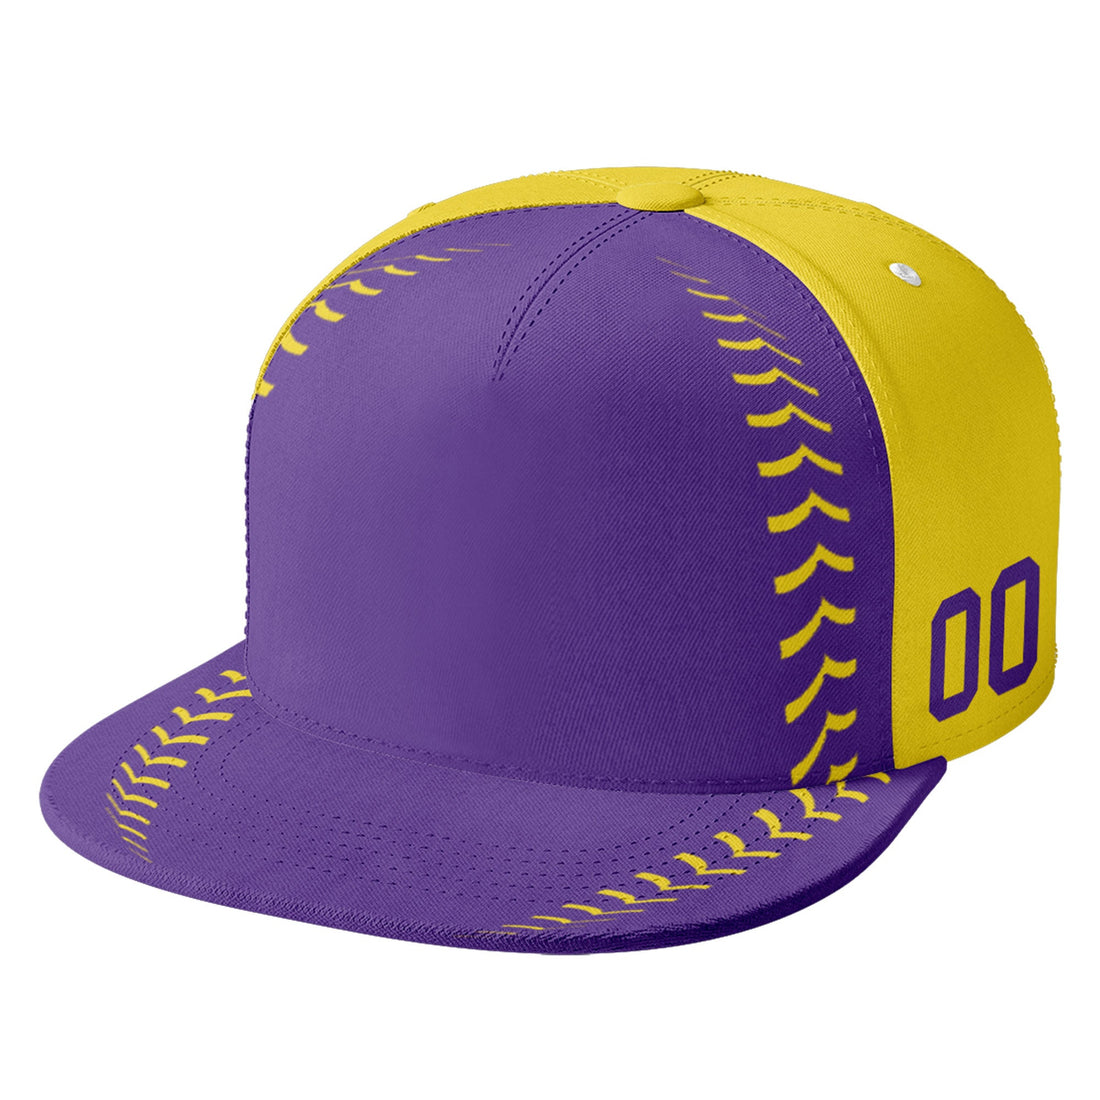 Custom Sport Design Hat Stitched Adjustable Snapback Personalized Baseball Cap PR067B-bd0b00d9-a9